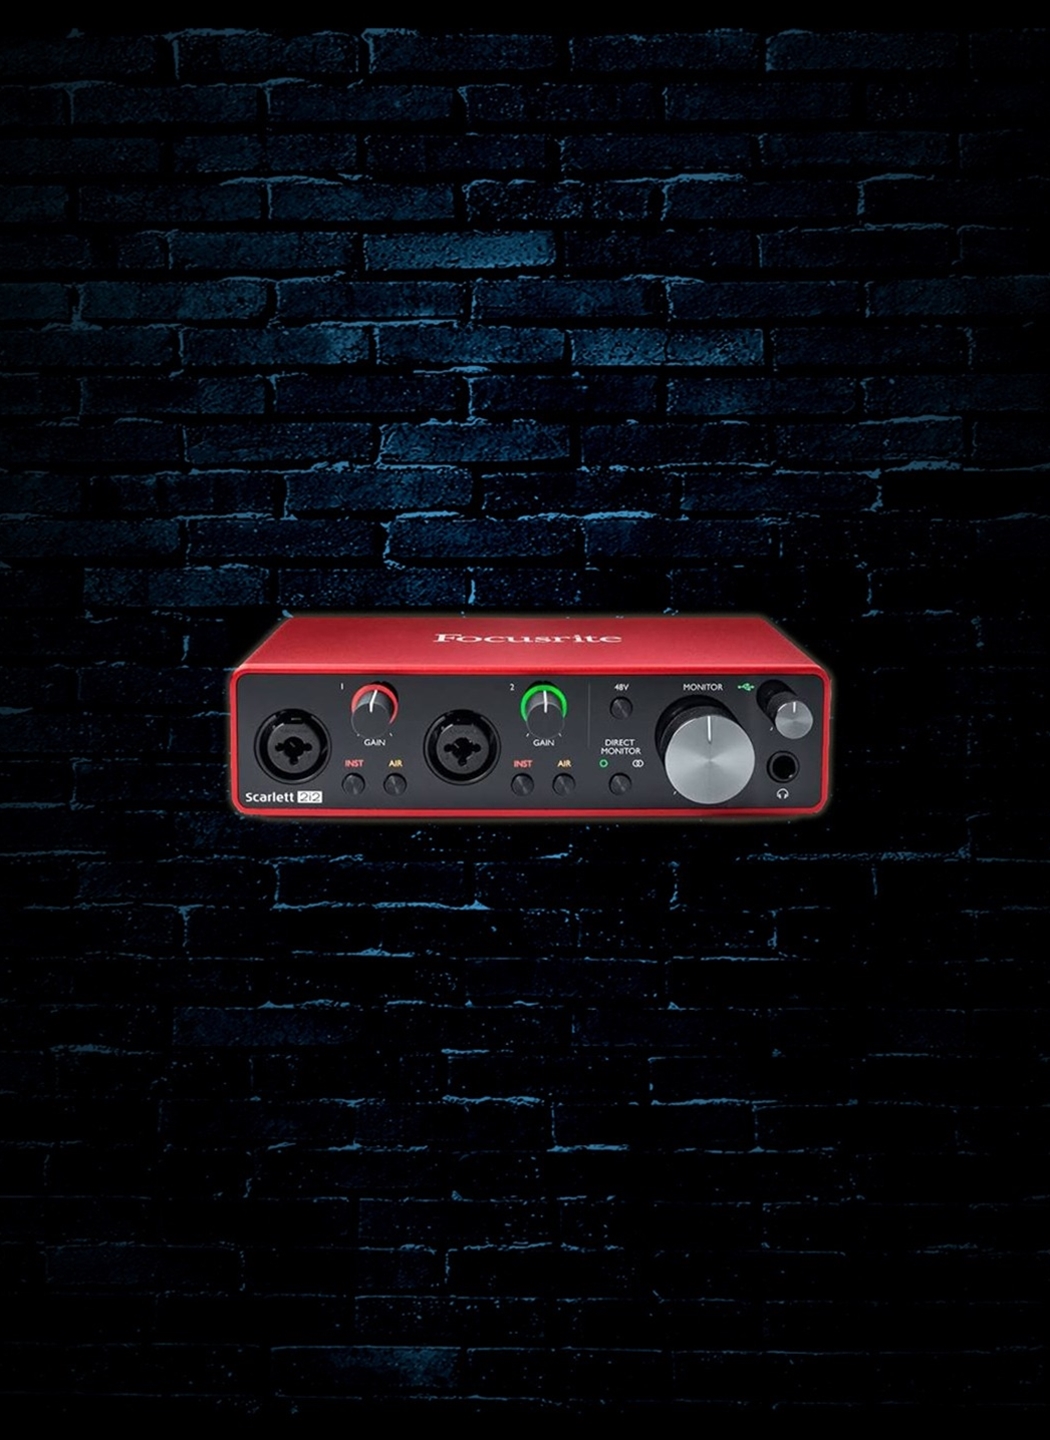 Focusrite Scarlett Solo Studio USB-C Audio Interface with